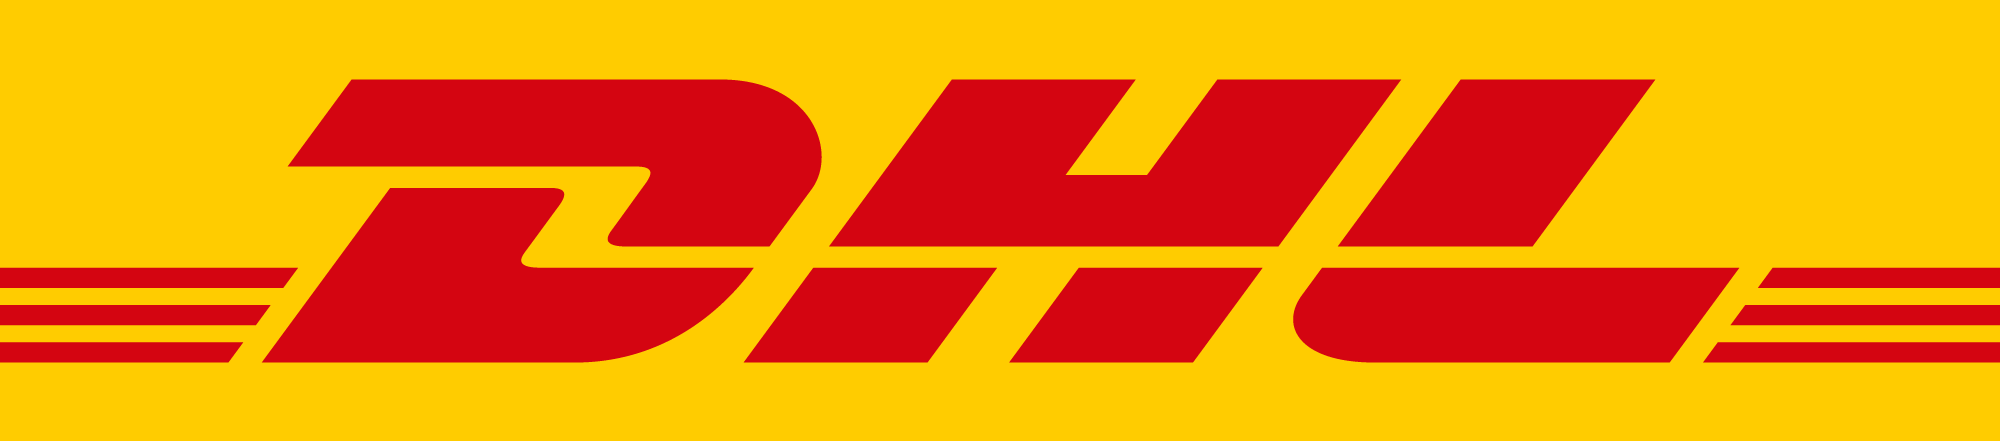 DHL logo rgb